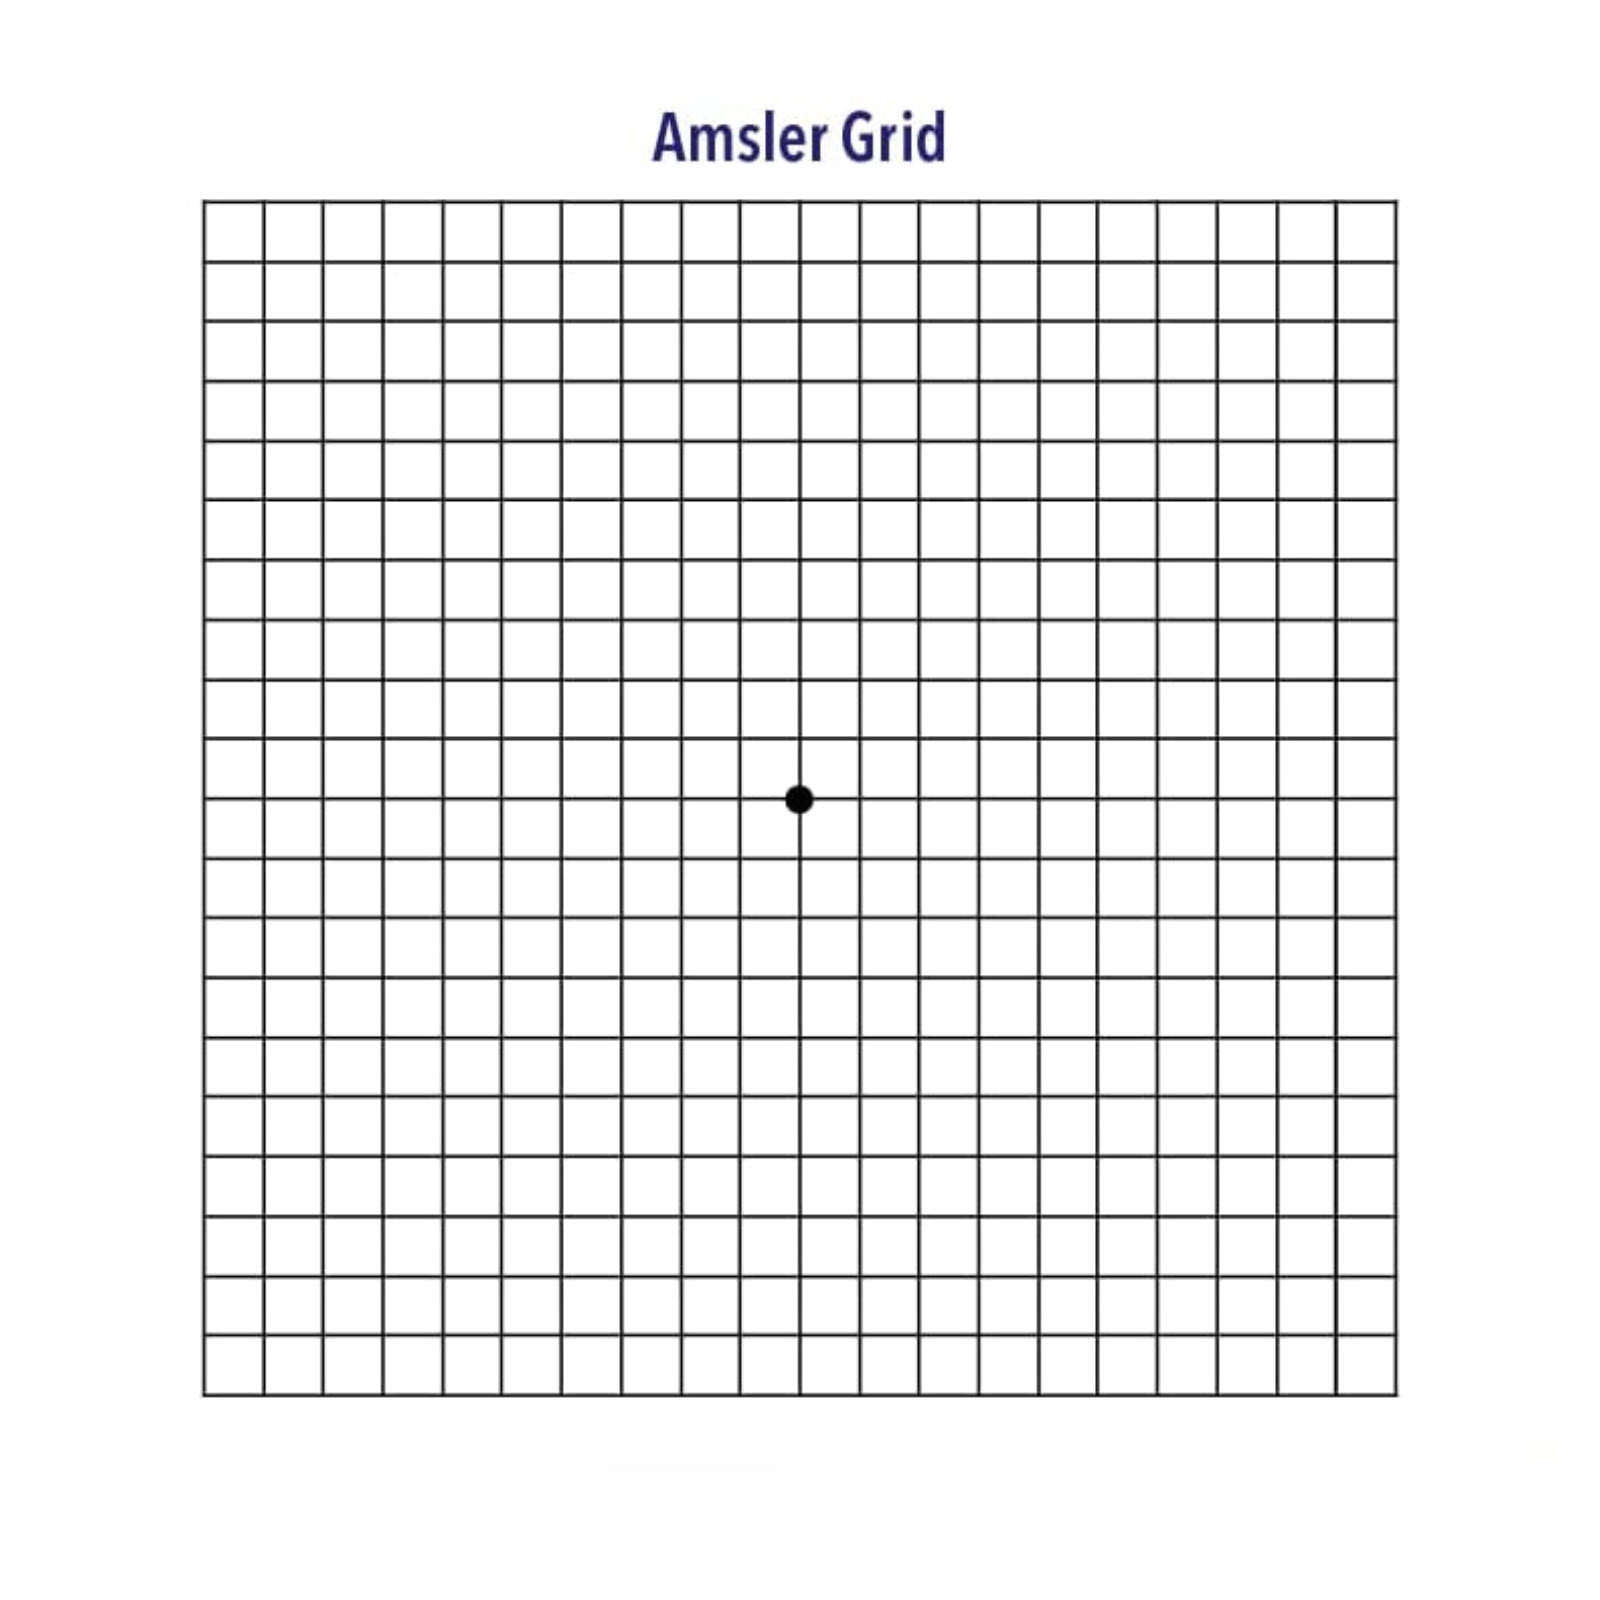 https://clinicalexperts.org/wp-content/uploads/2022/10/amsler-grid.jpg